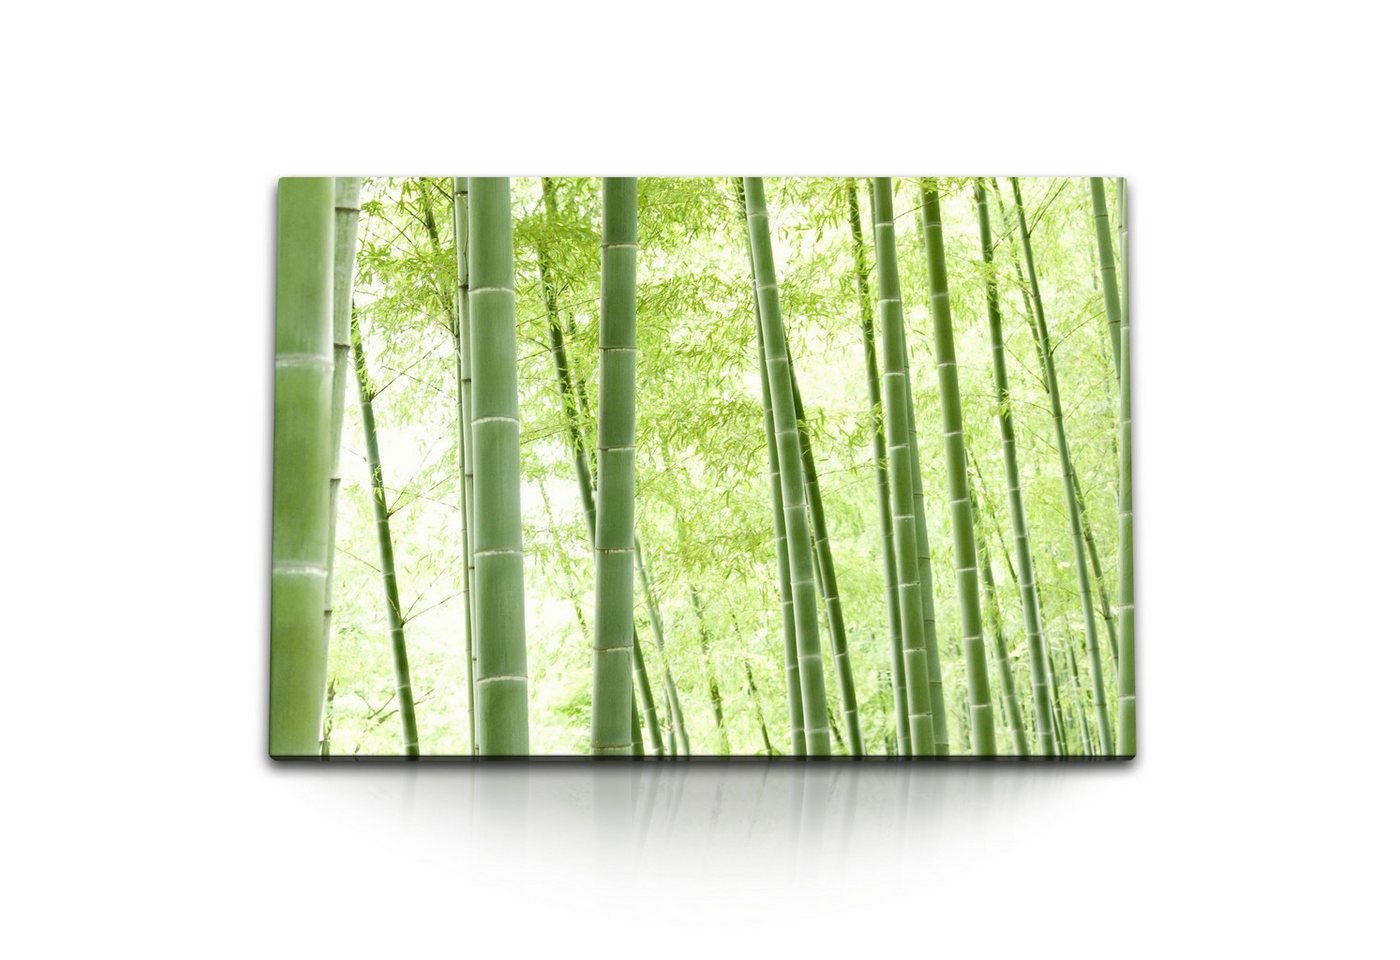 Sinus Art Leinwandbild 120x80cm Wandbild auf Leinwand Bambus Bambuswald Asien Natur Grün, (1 St) von Sinus Art